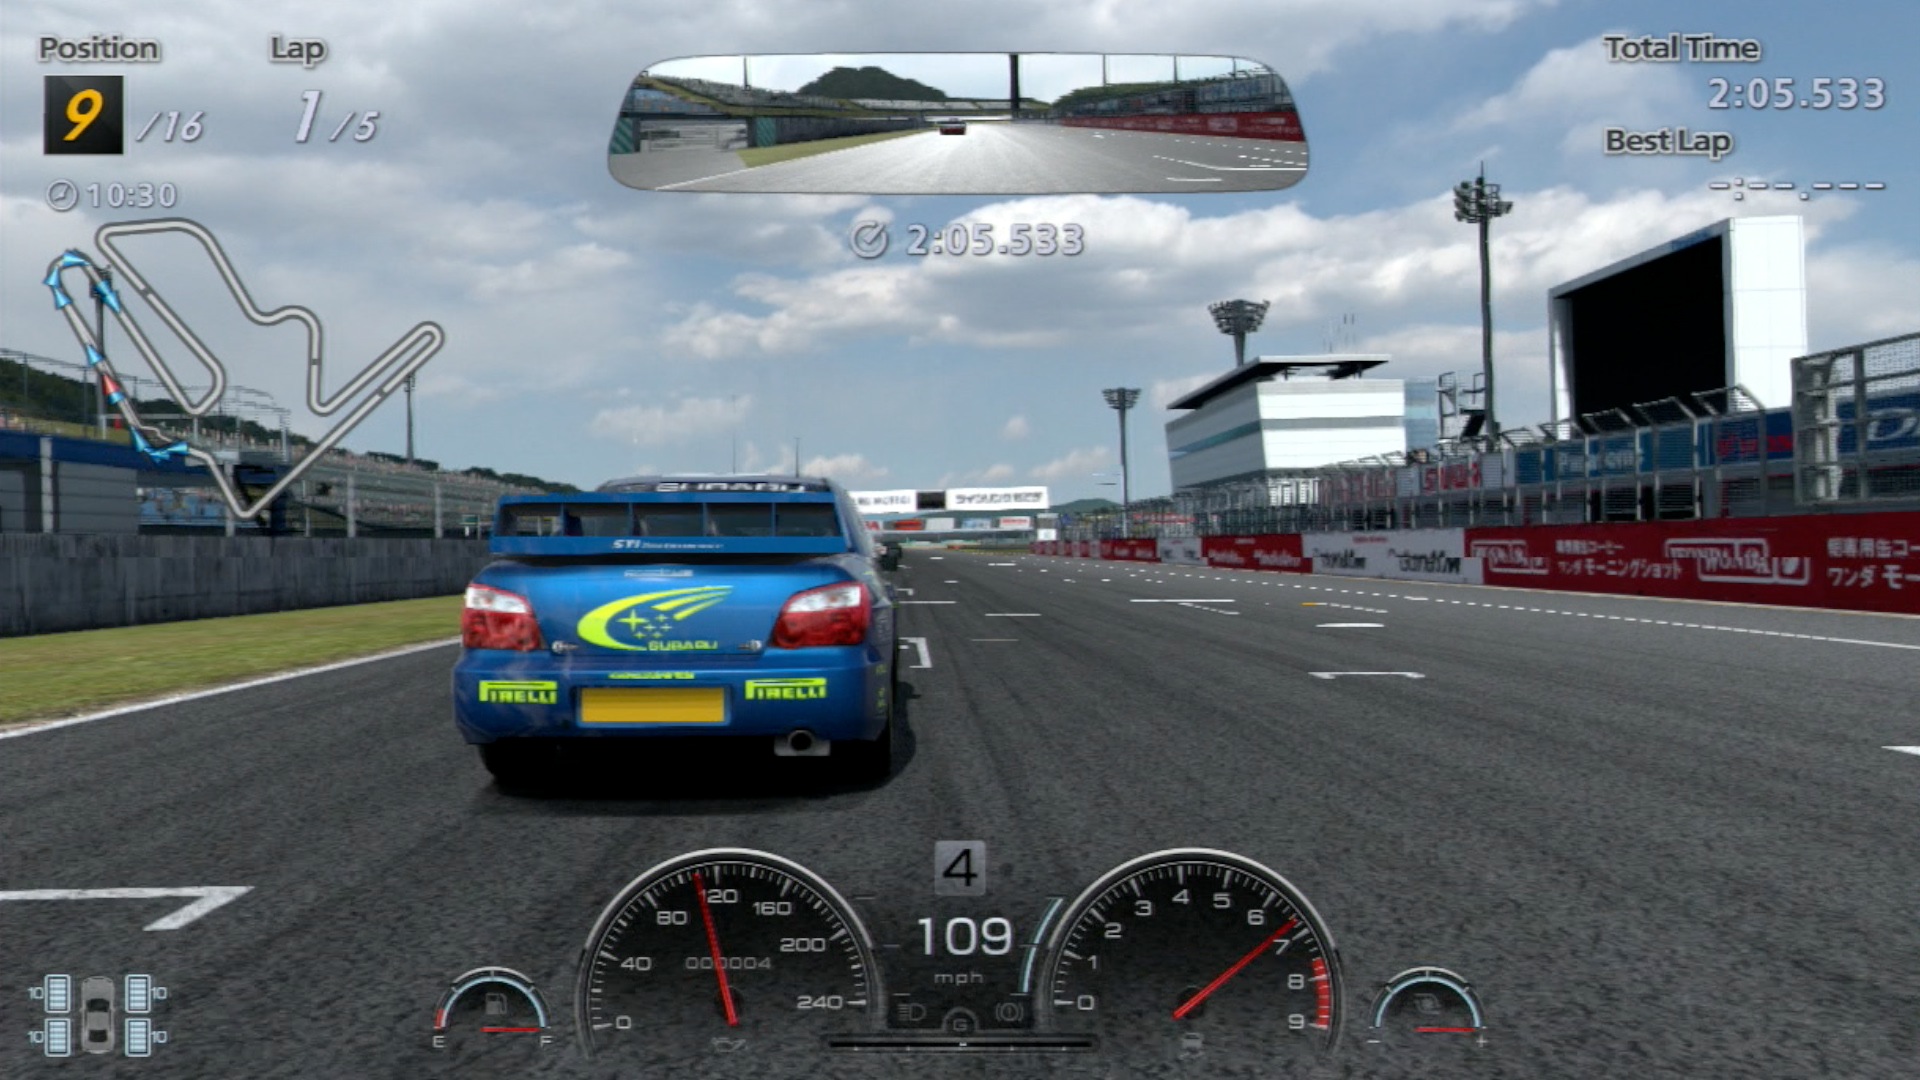 Overeenkomstig met optie Goed Gran Turismo 6 money glitch found - GameSpot